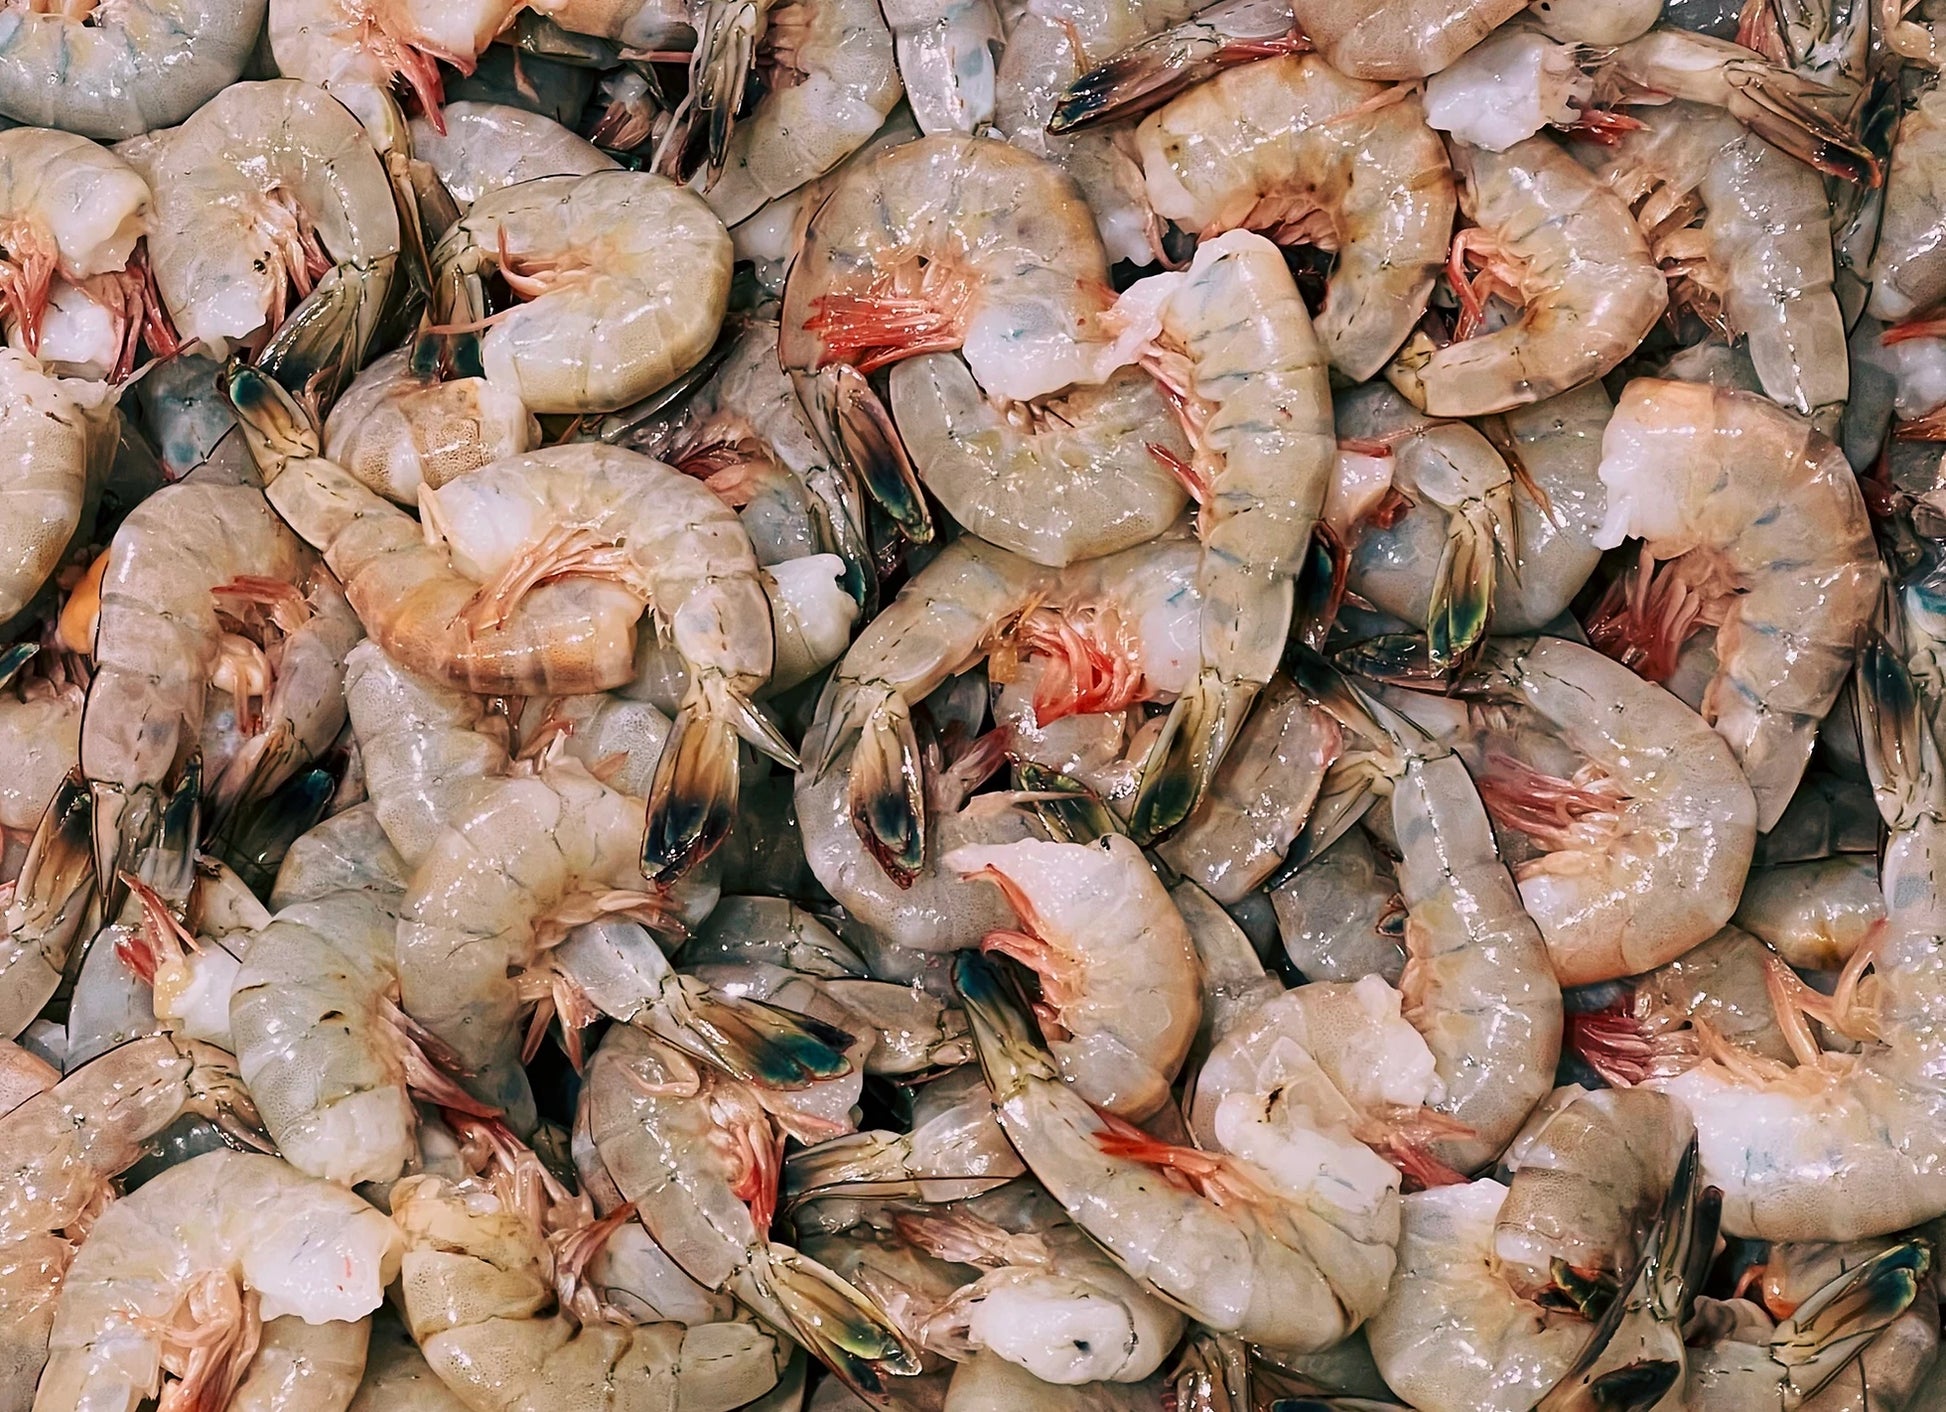 mayport shrimp for sale in florida